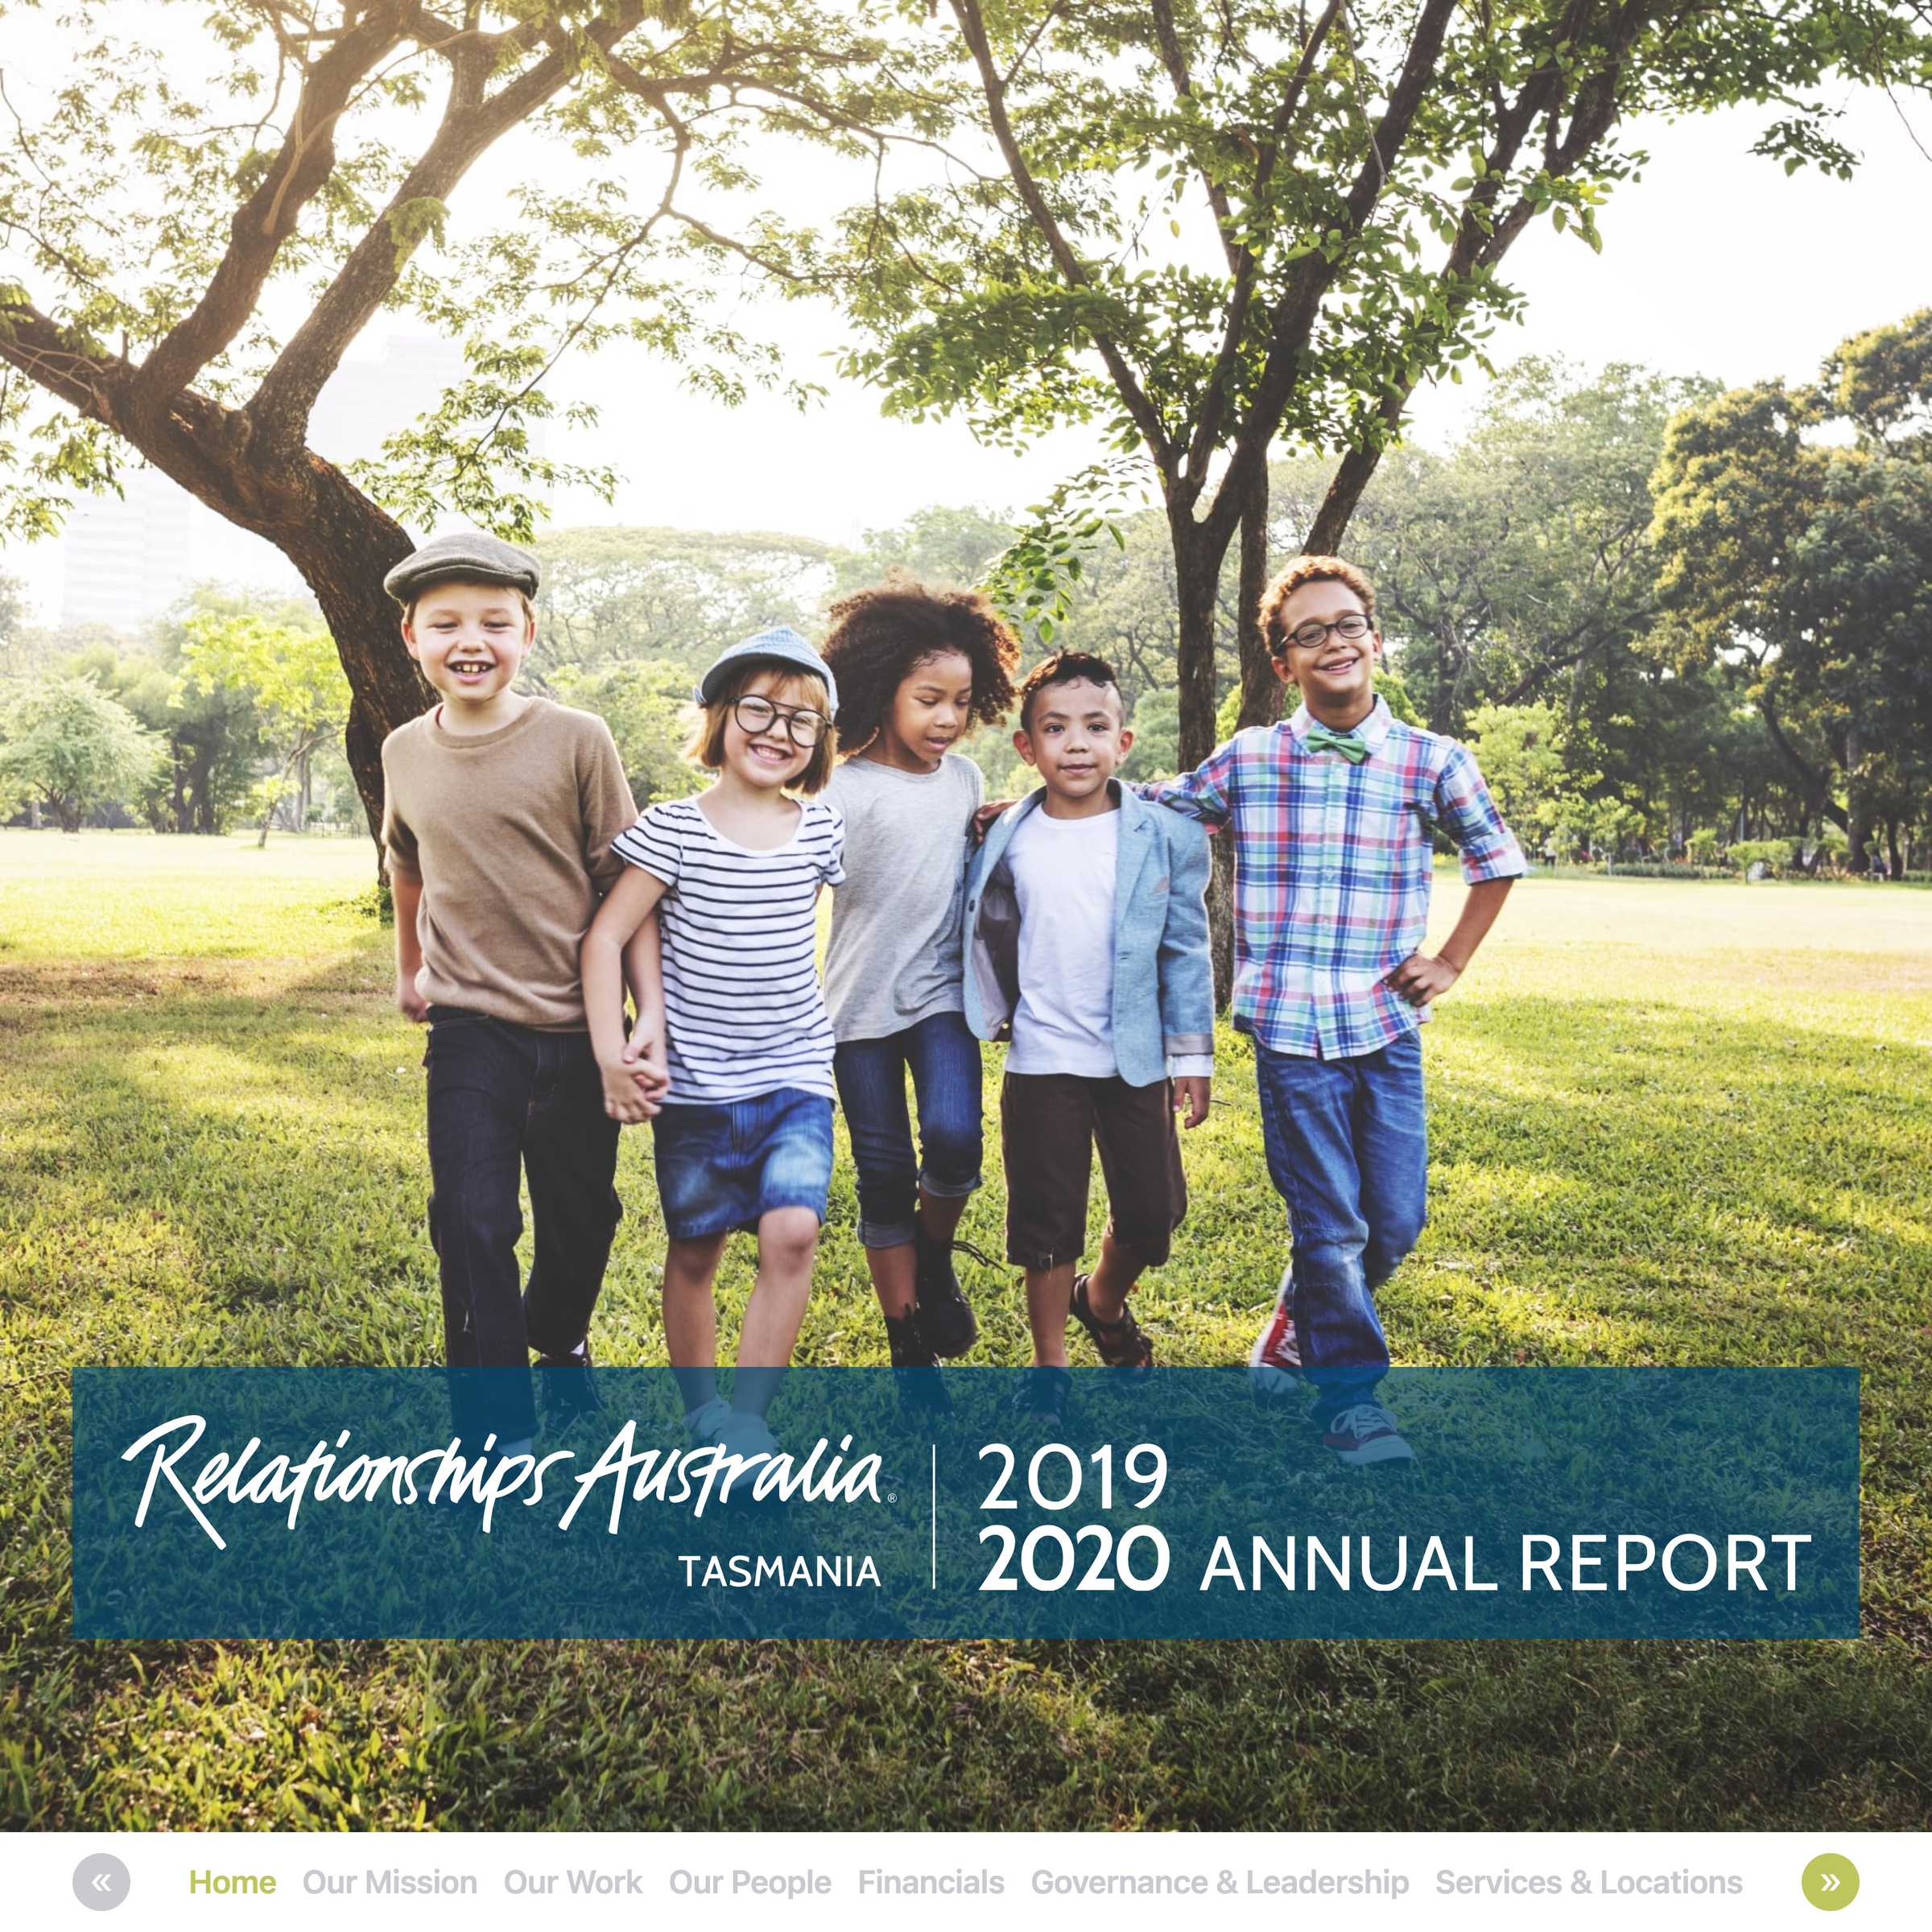 Screenshot of the Relationships Australia Tasmania Annual Report 2019-2020 project